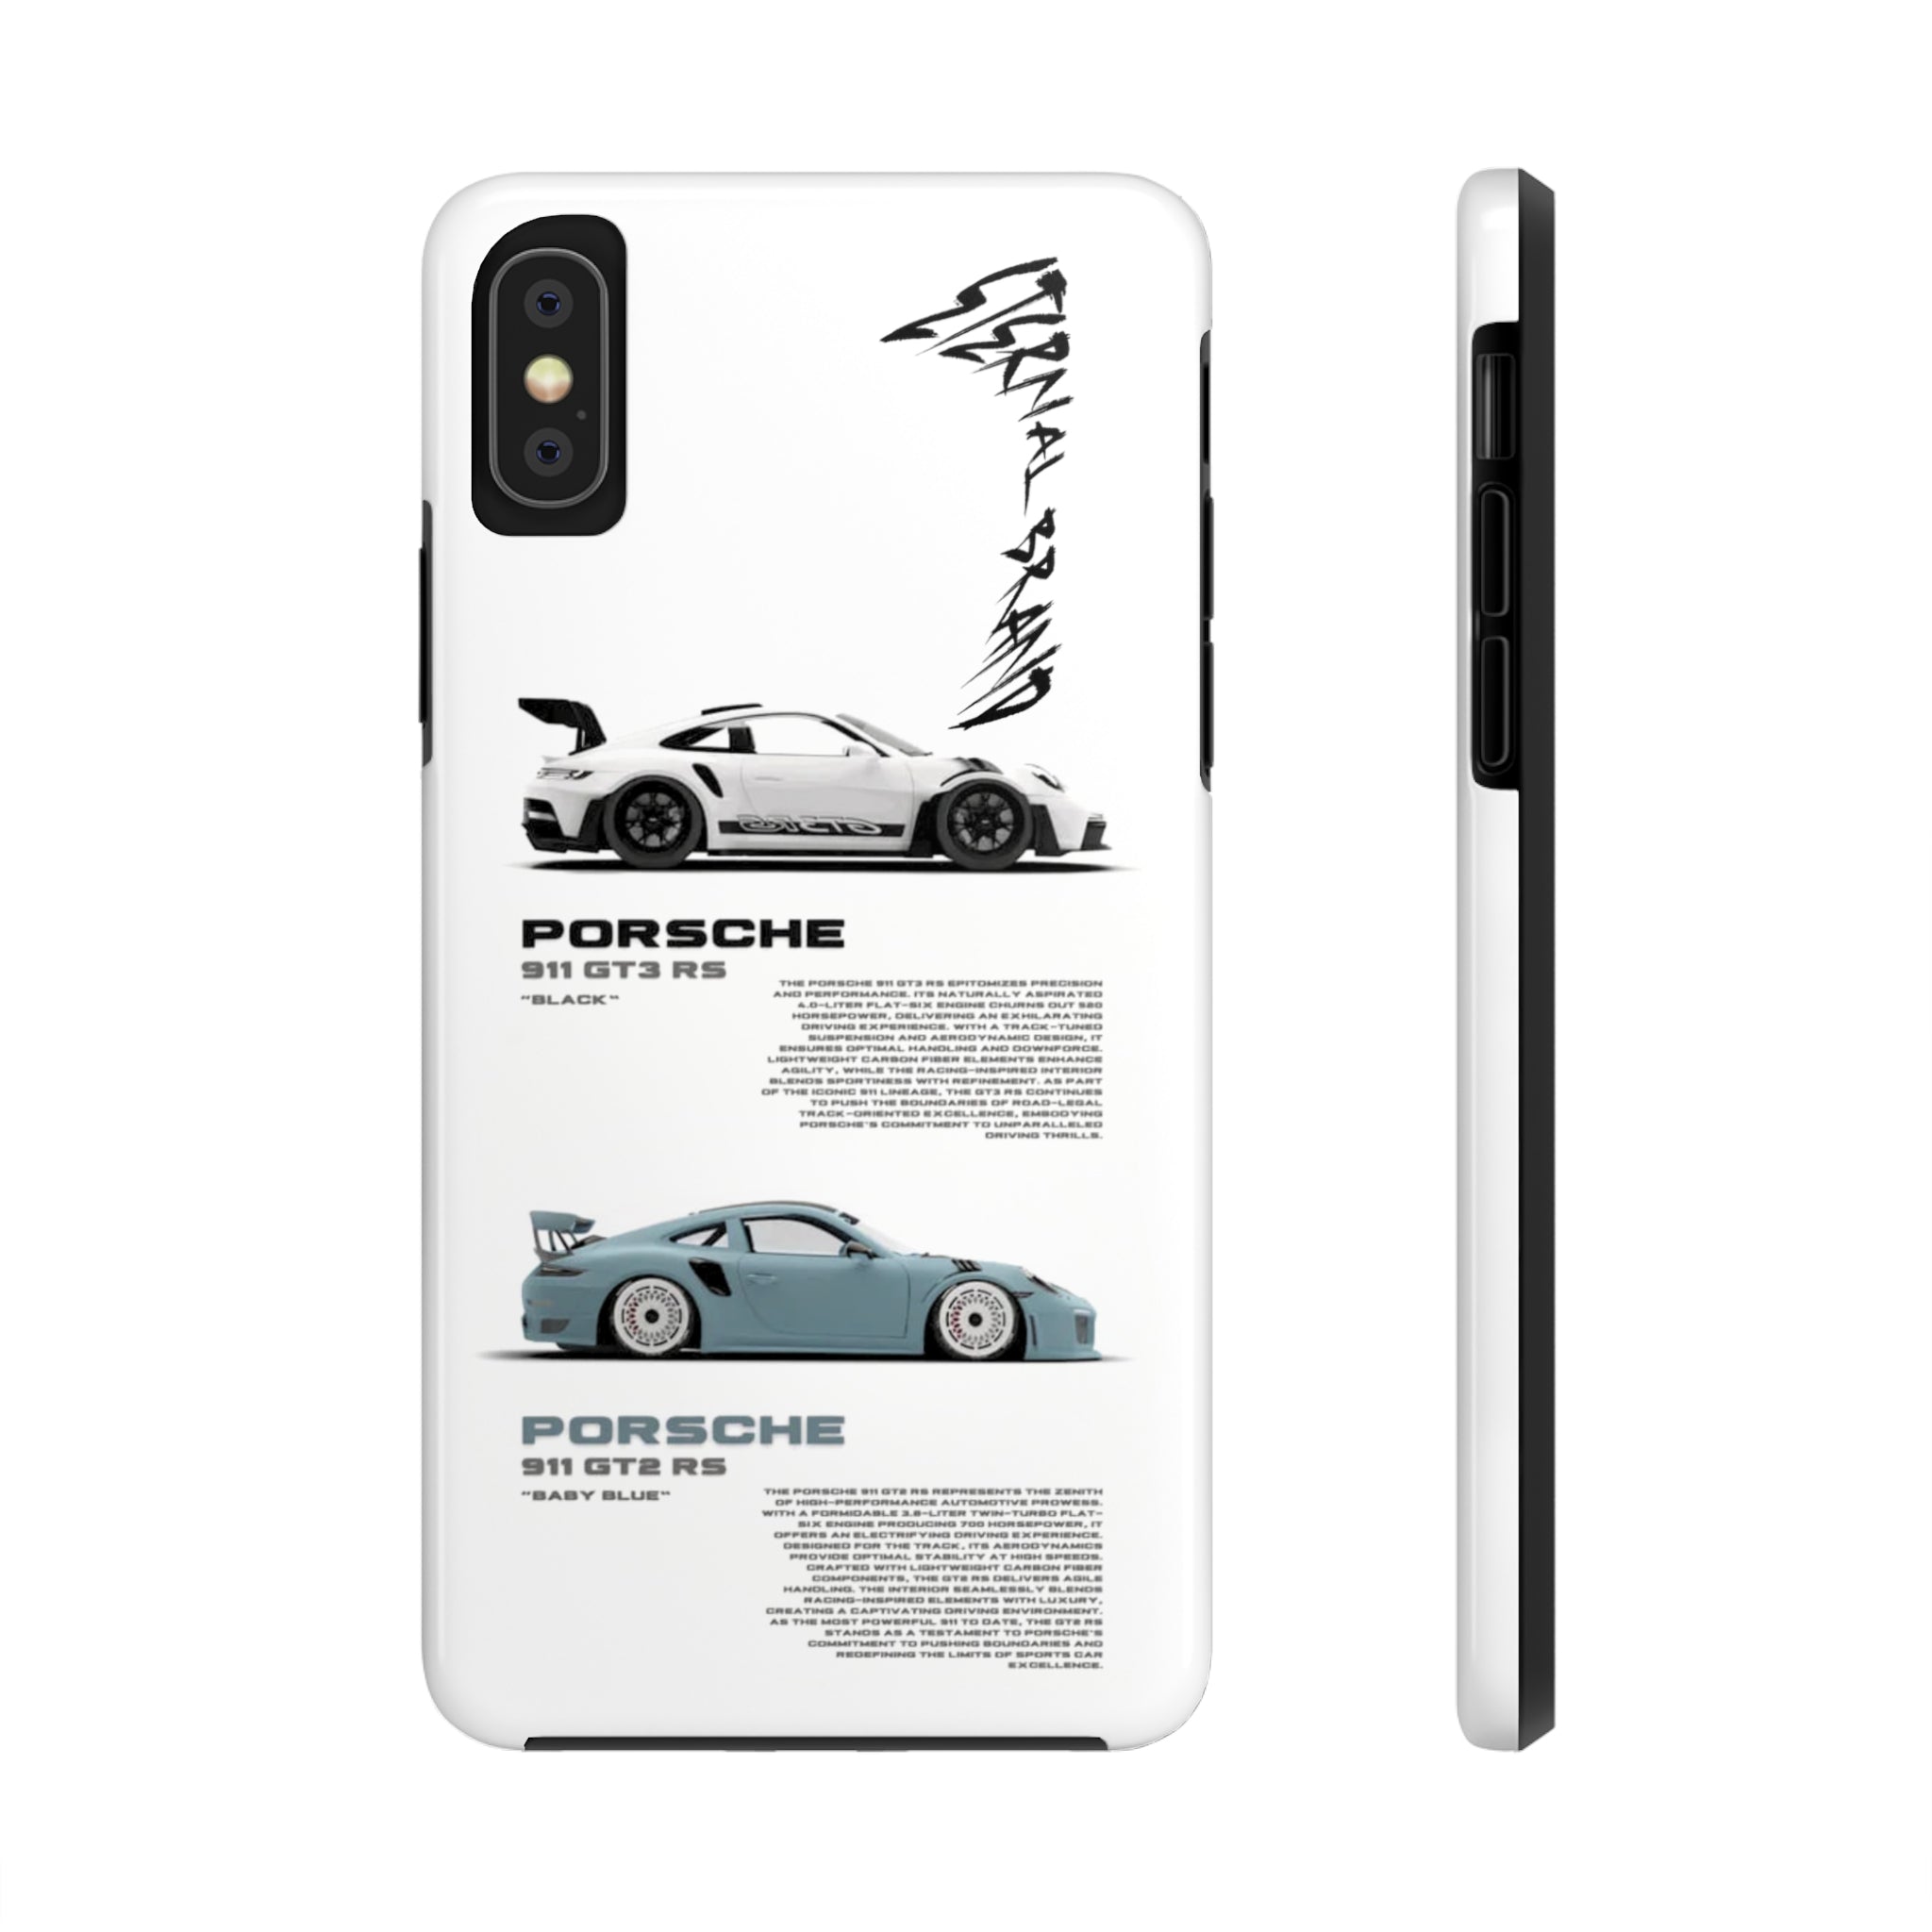 Porsche GT3 RS "Duo"